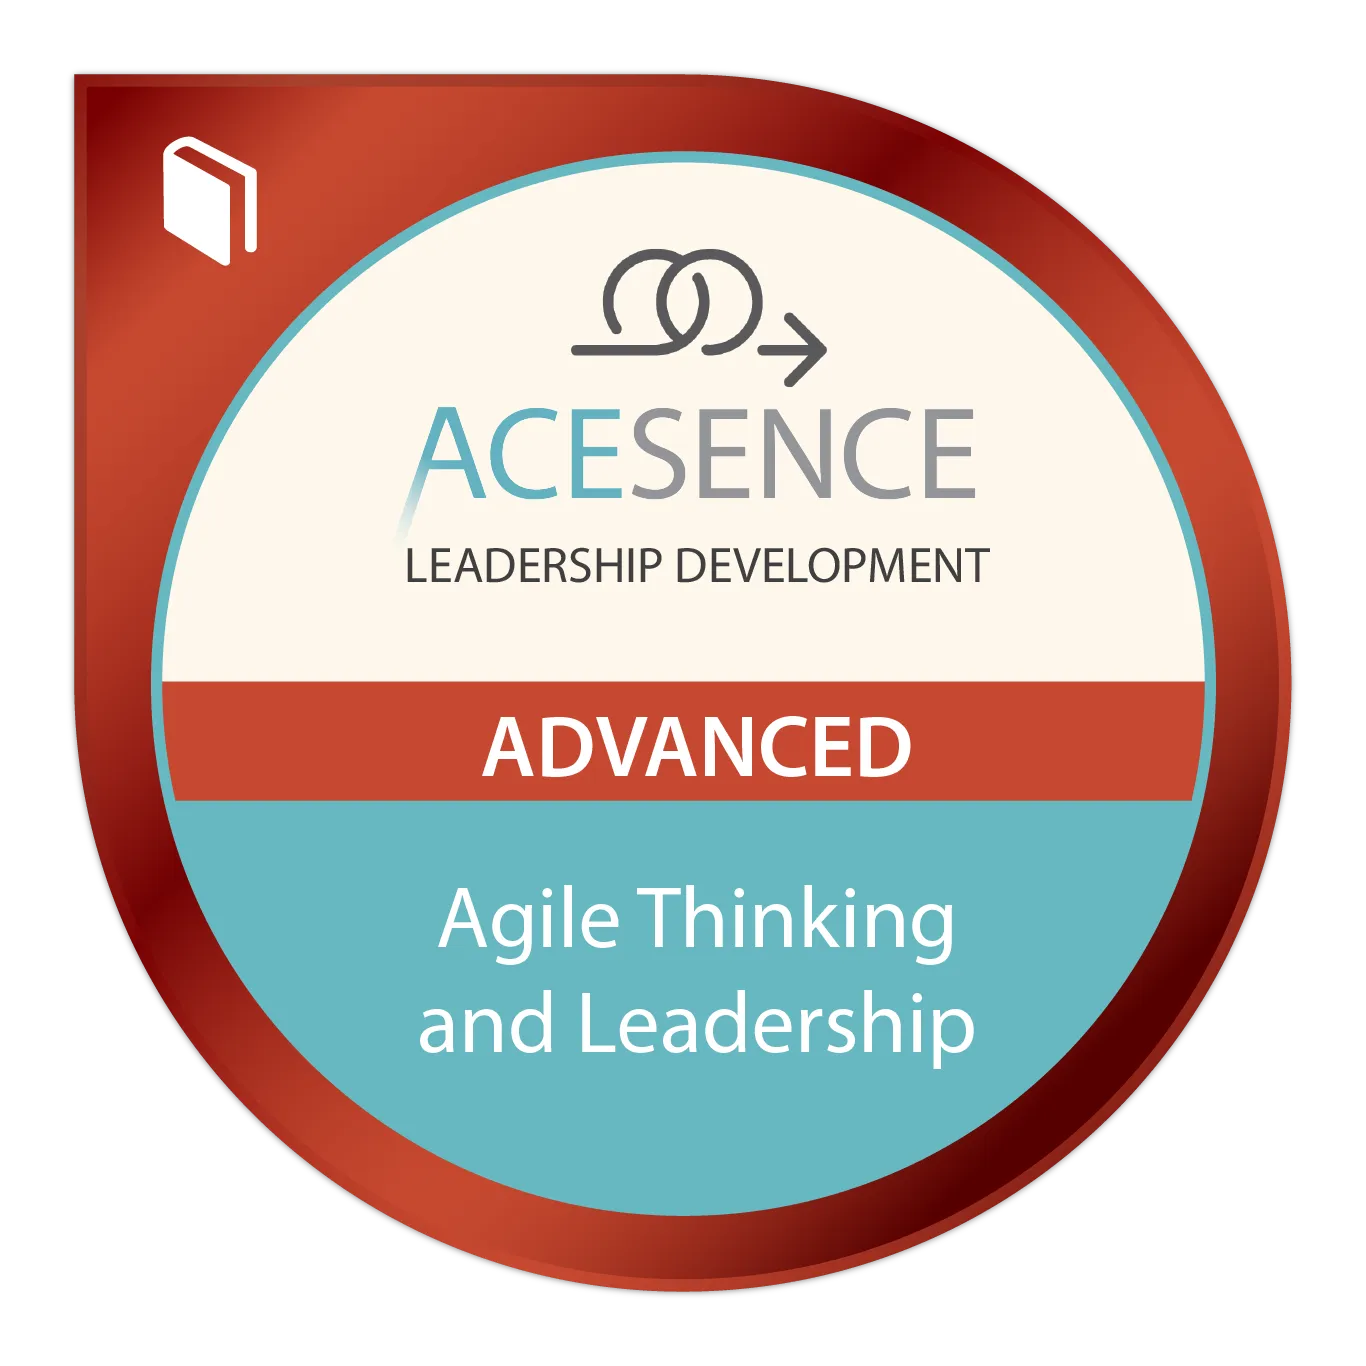 agile thinking and leadership advanced